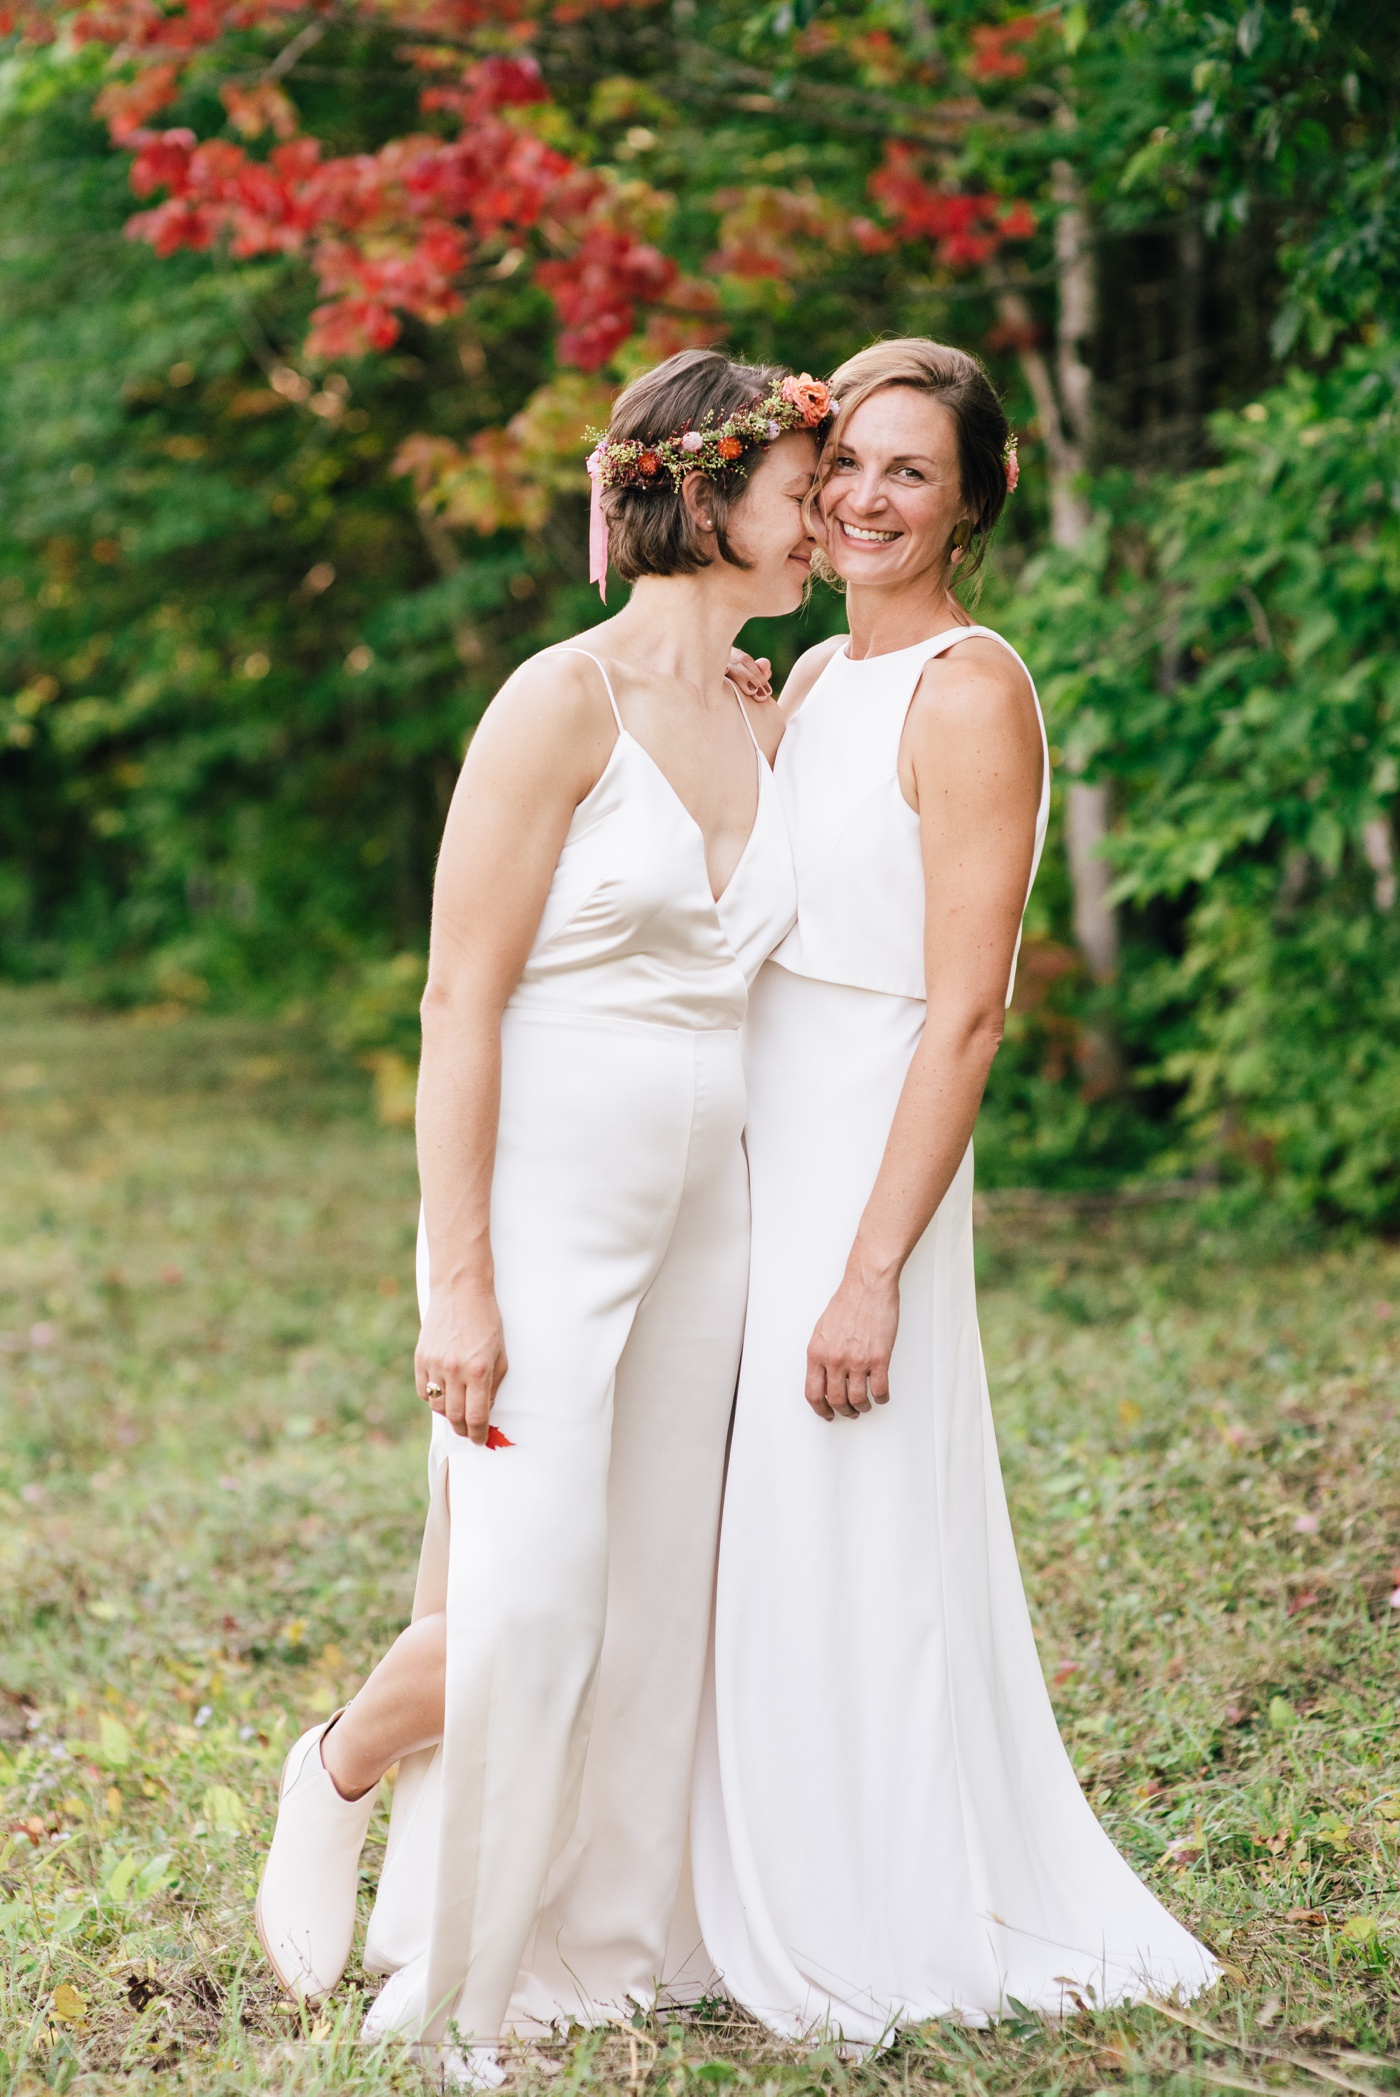 Christina Richards Photography - Boston and New England Wedding Photographer